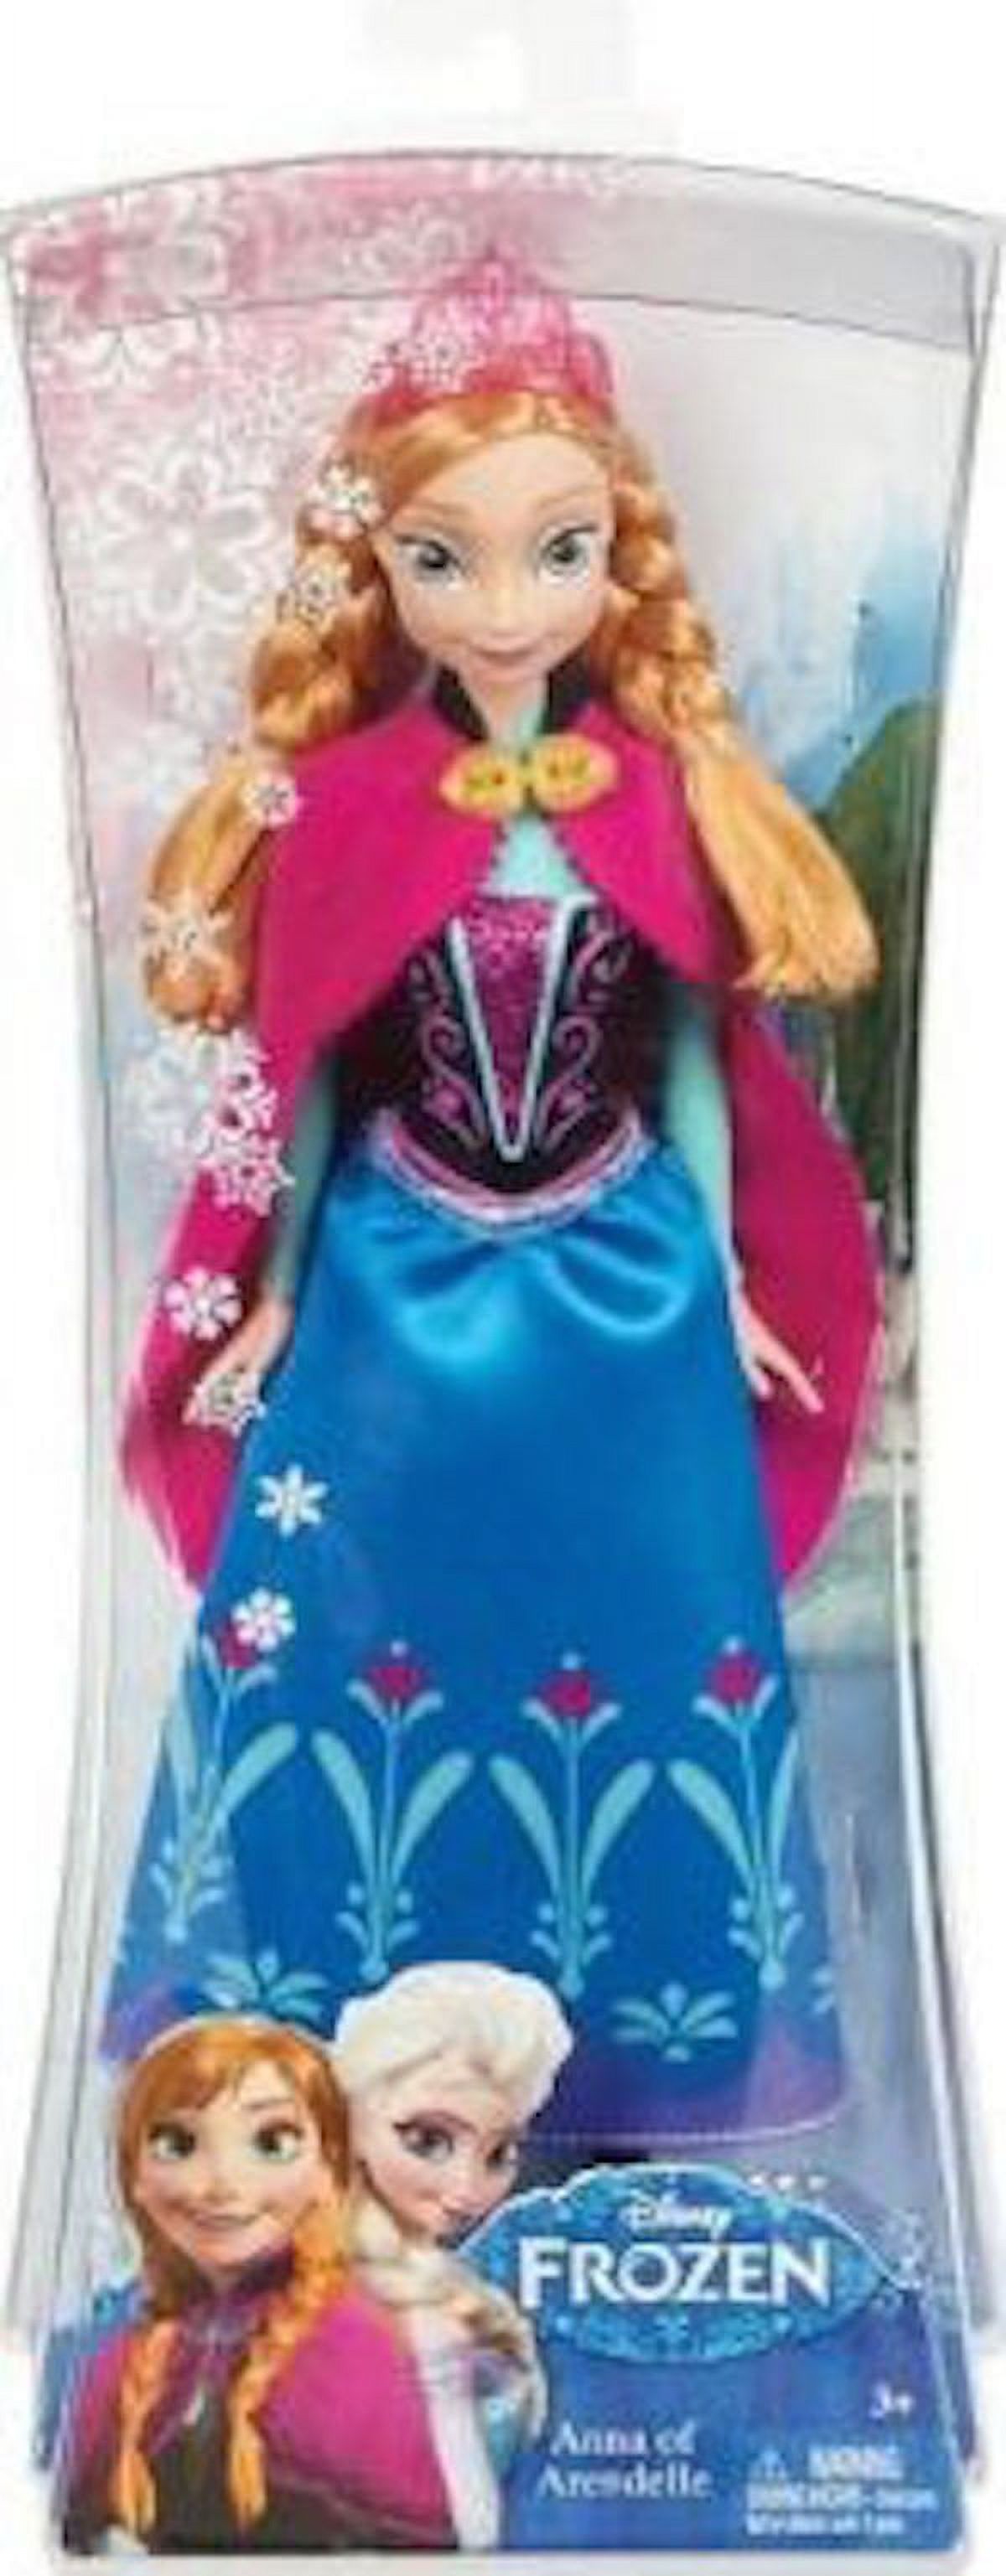 Disney Frozen Sparkle Anna Doll - image 2 of 4